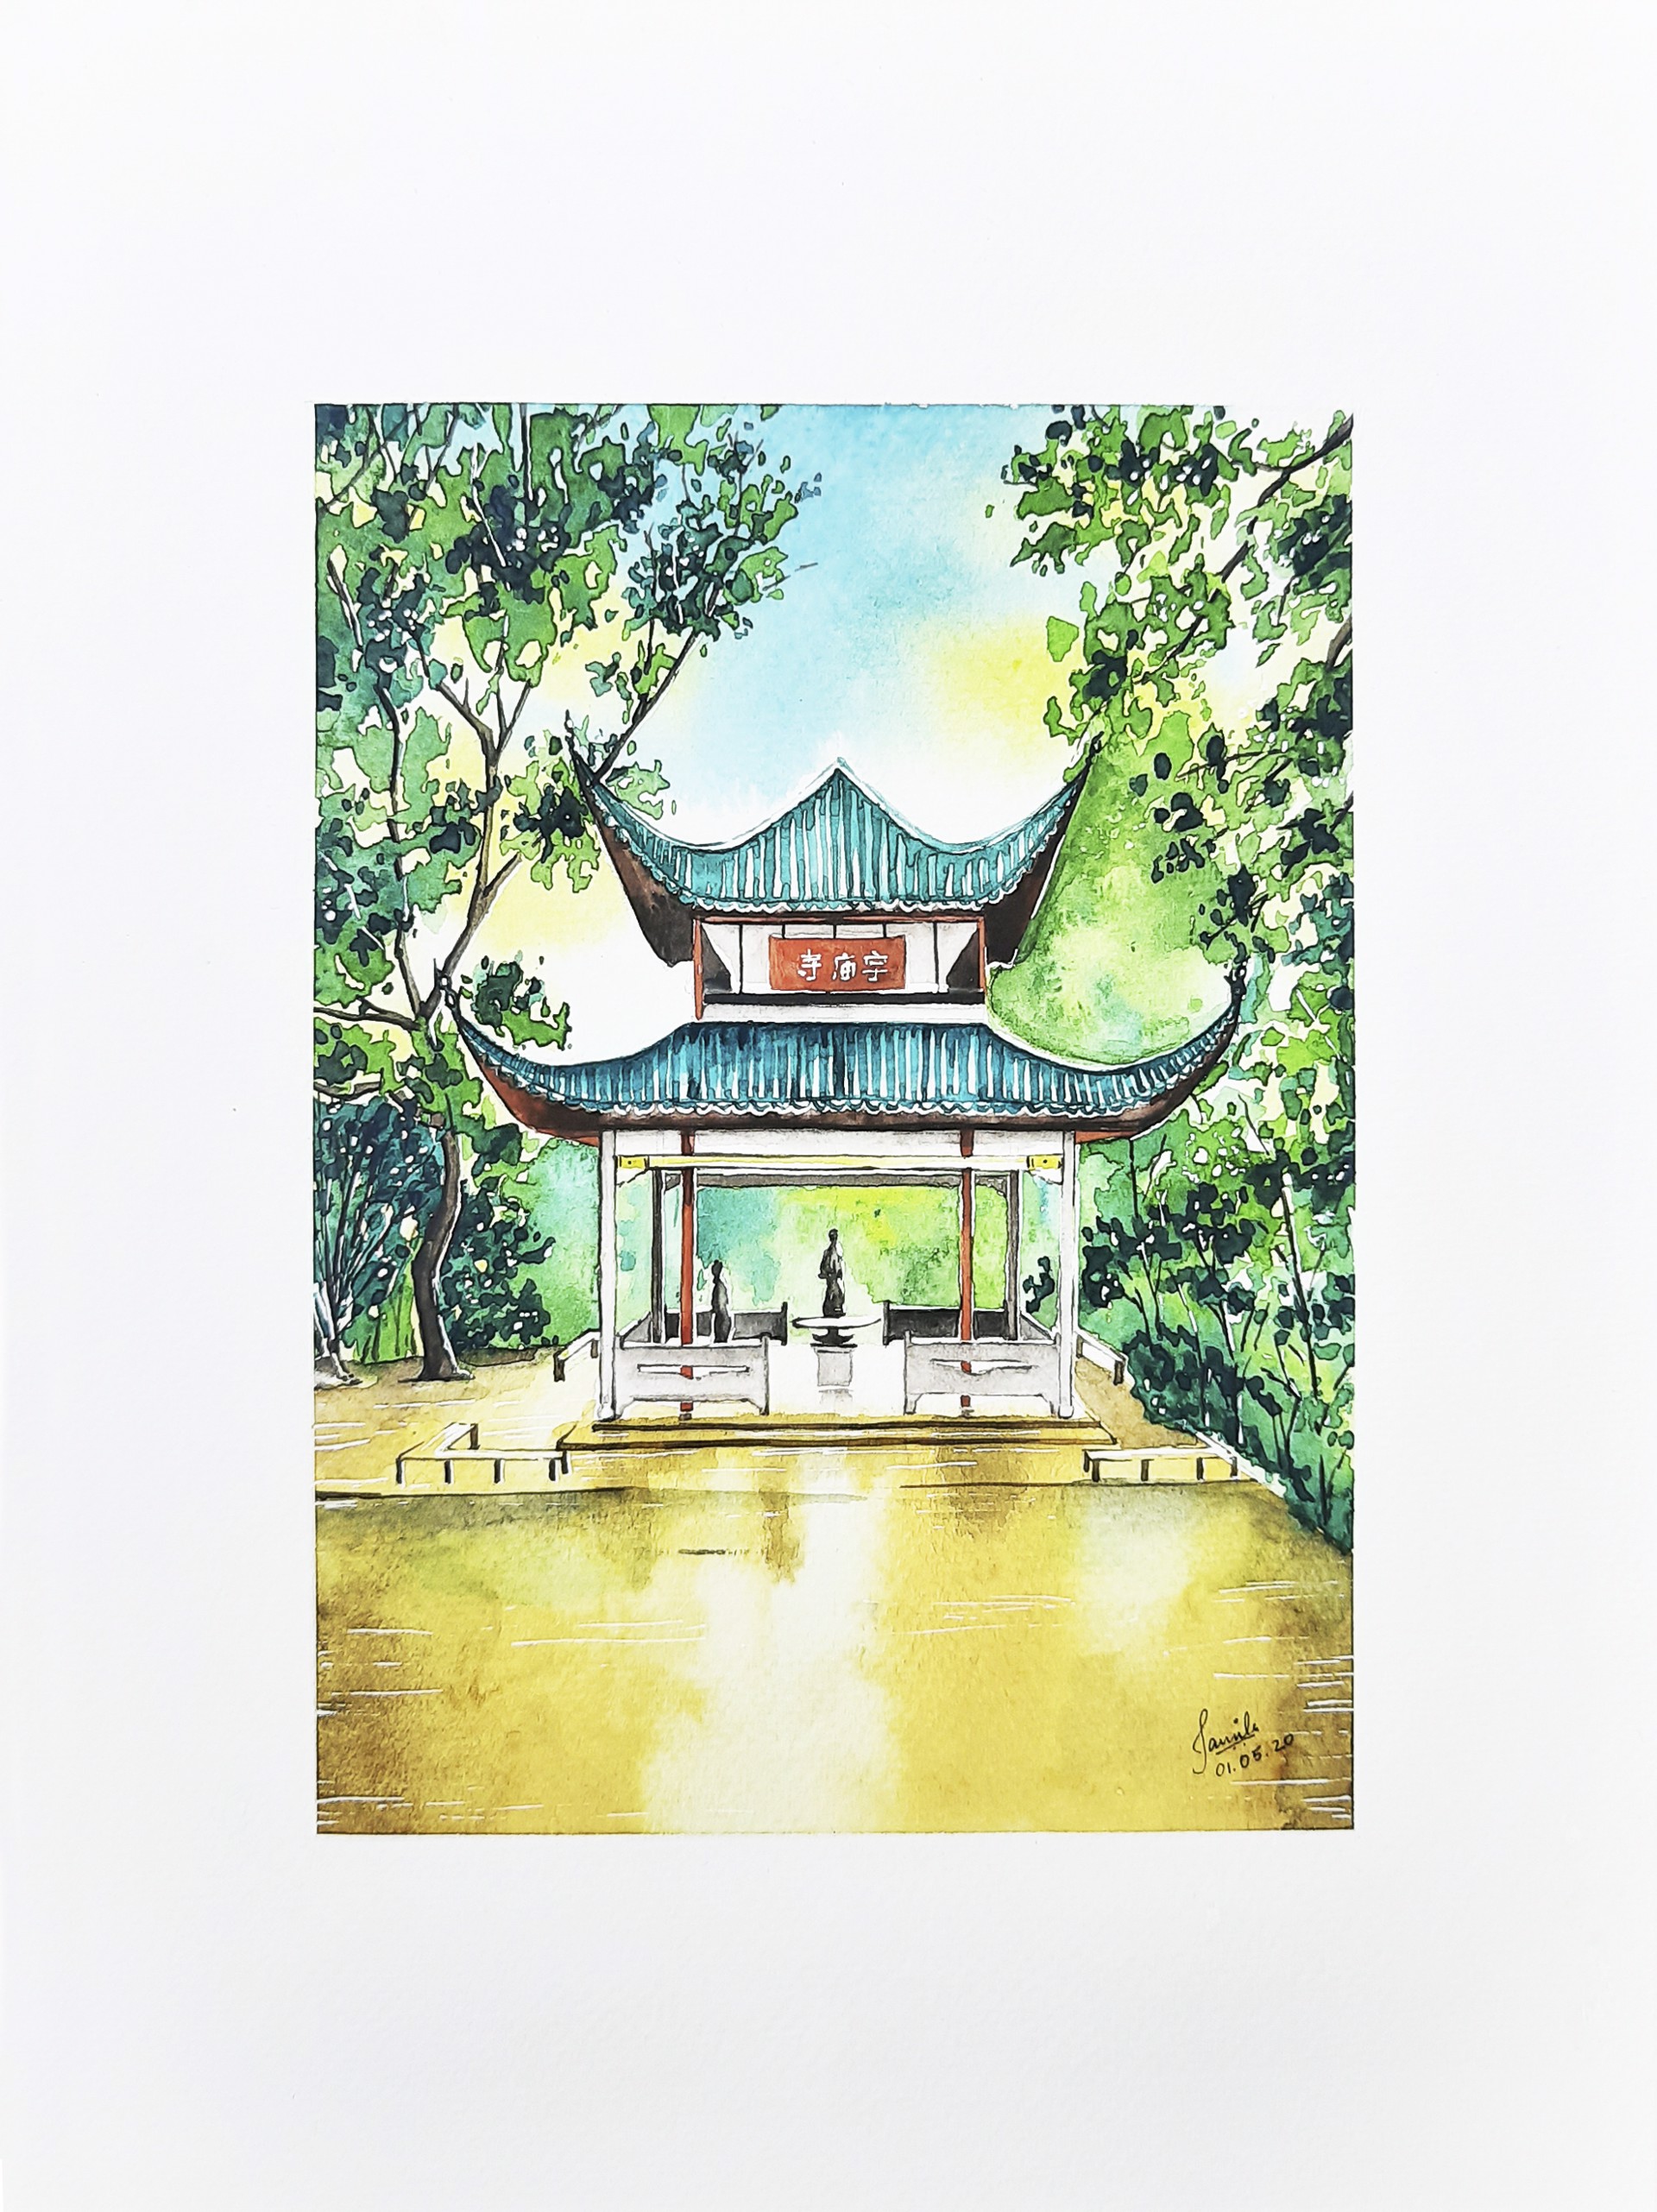 Aiwan Pavilion, Hunan by Jamila Kapdawala